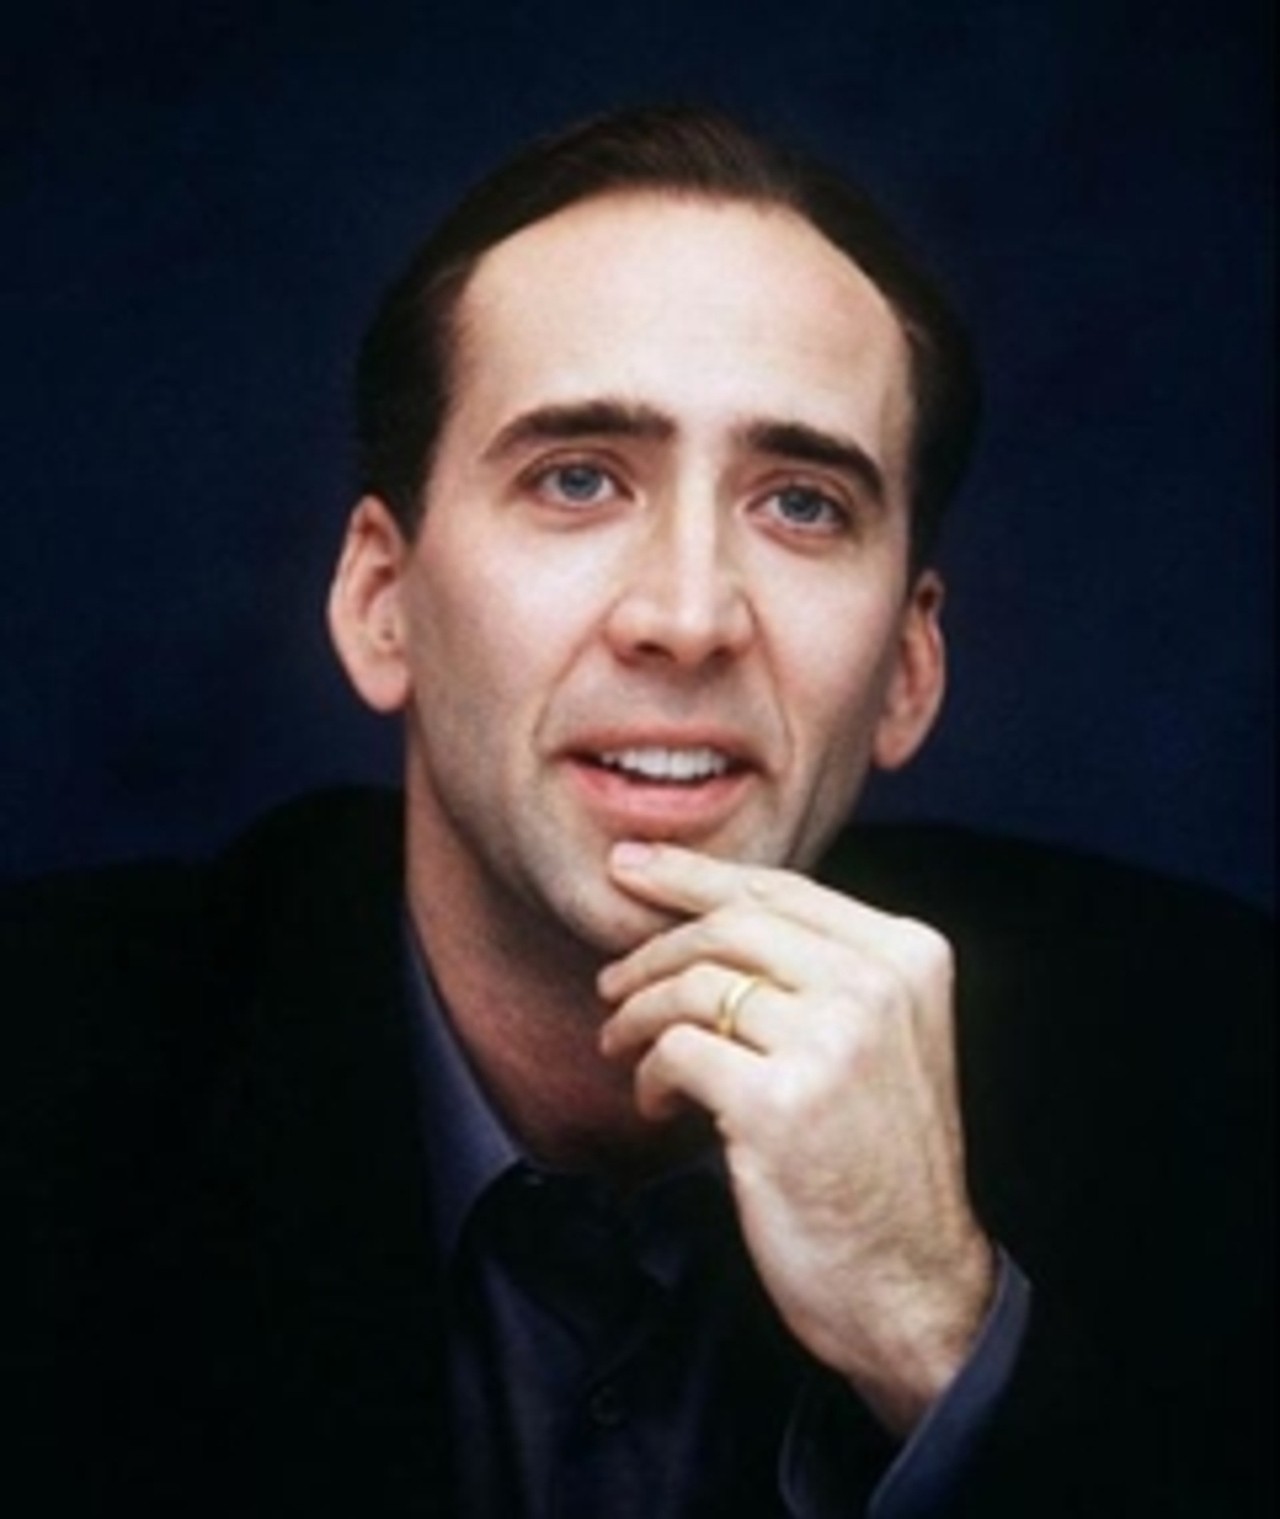 Photo of Nicolas Cage